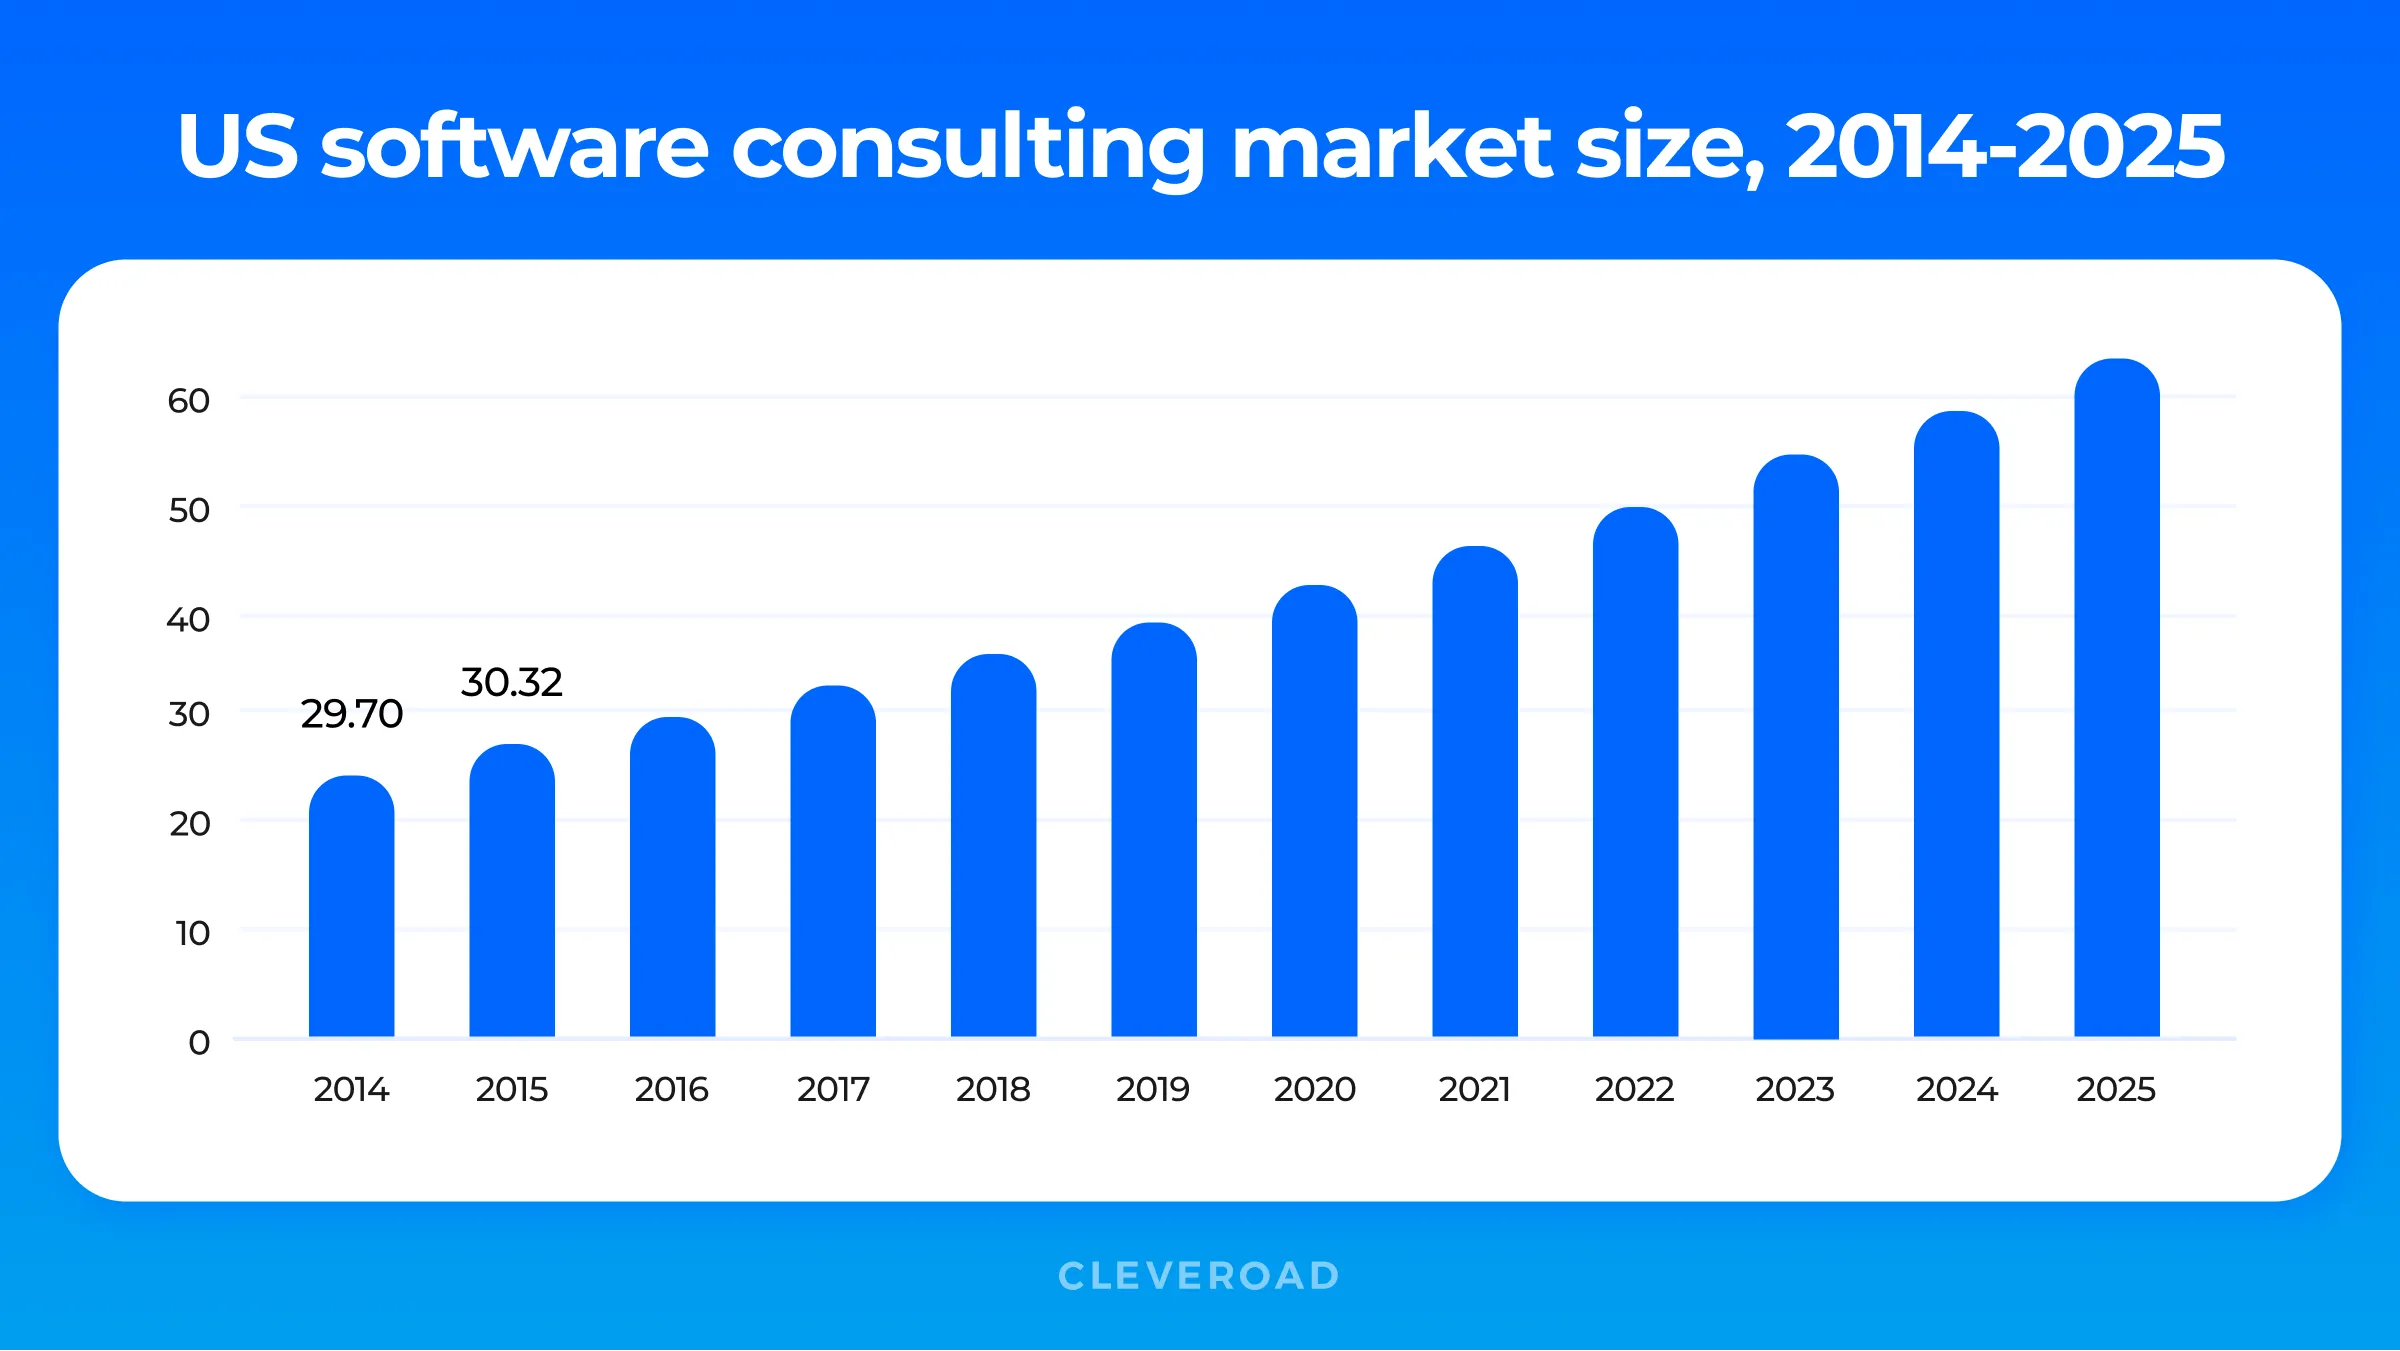 US IT consulsting market size, 2014-2025